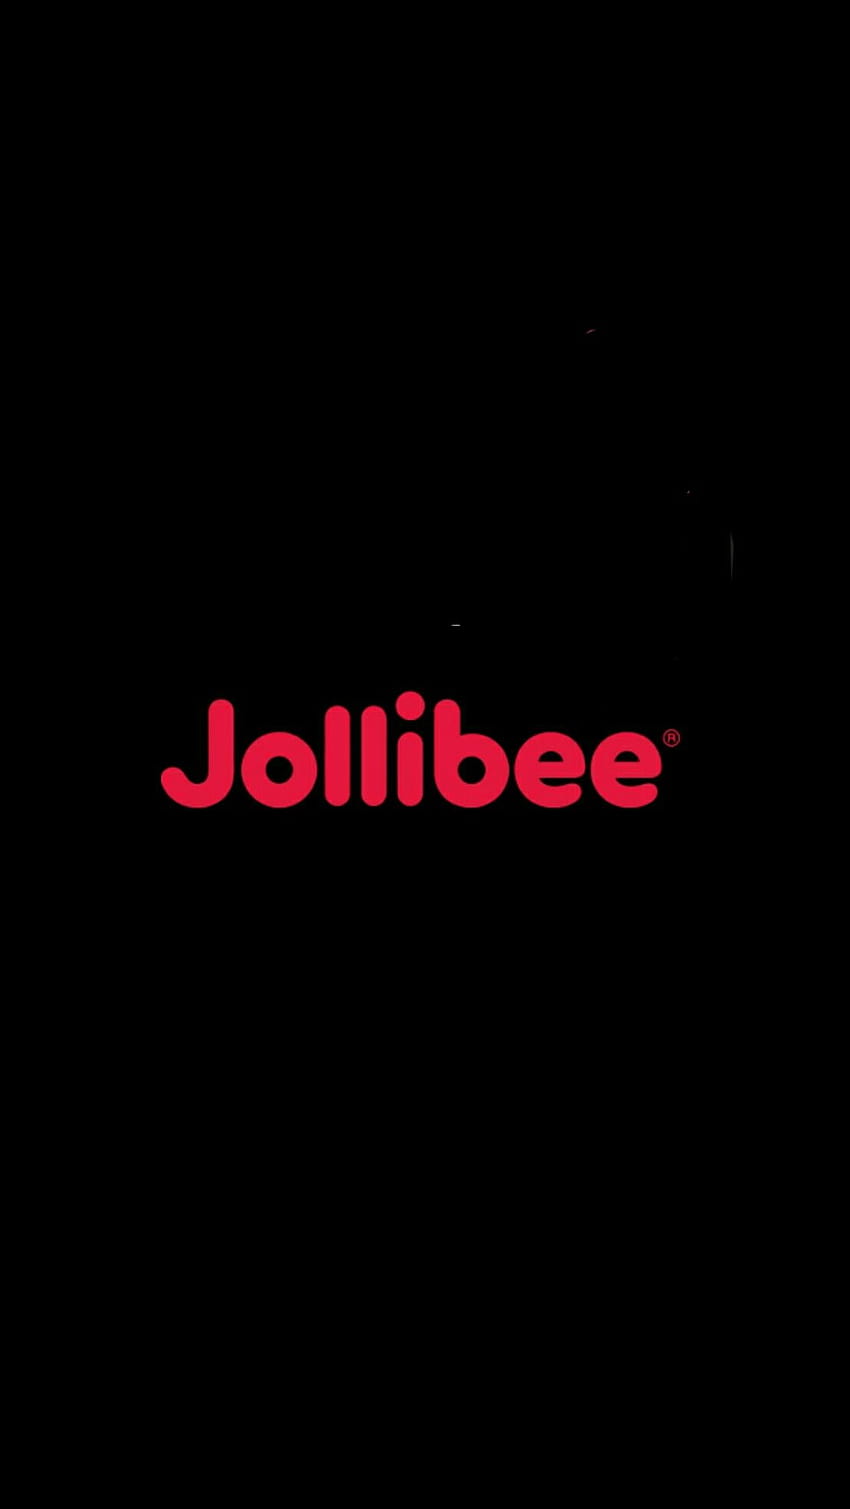 jollibee wallpaper background